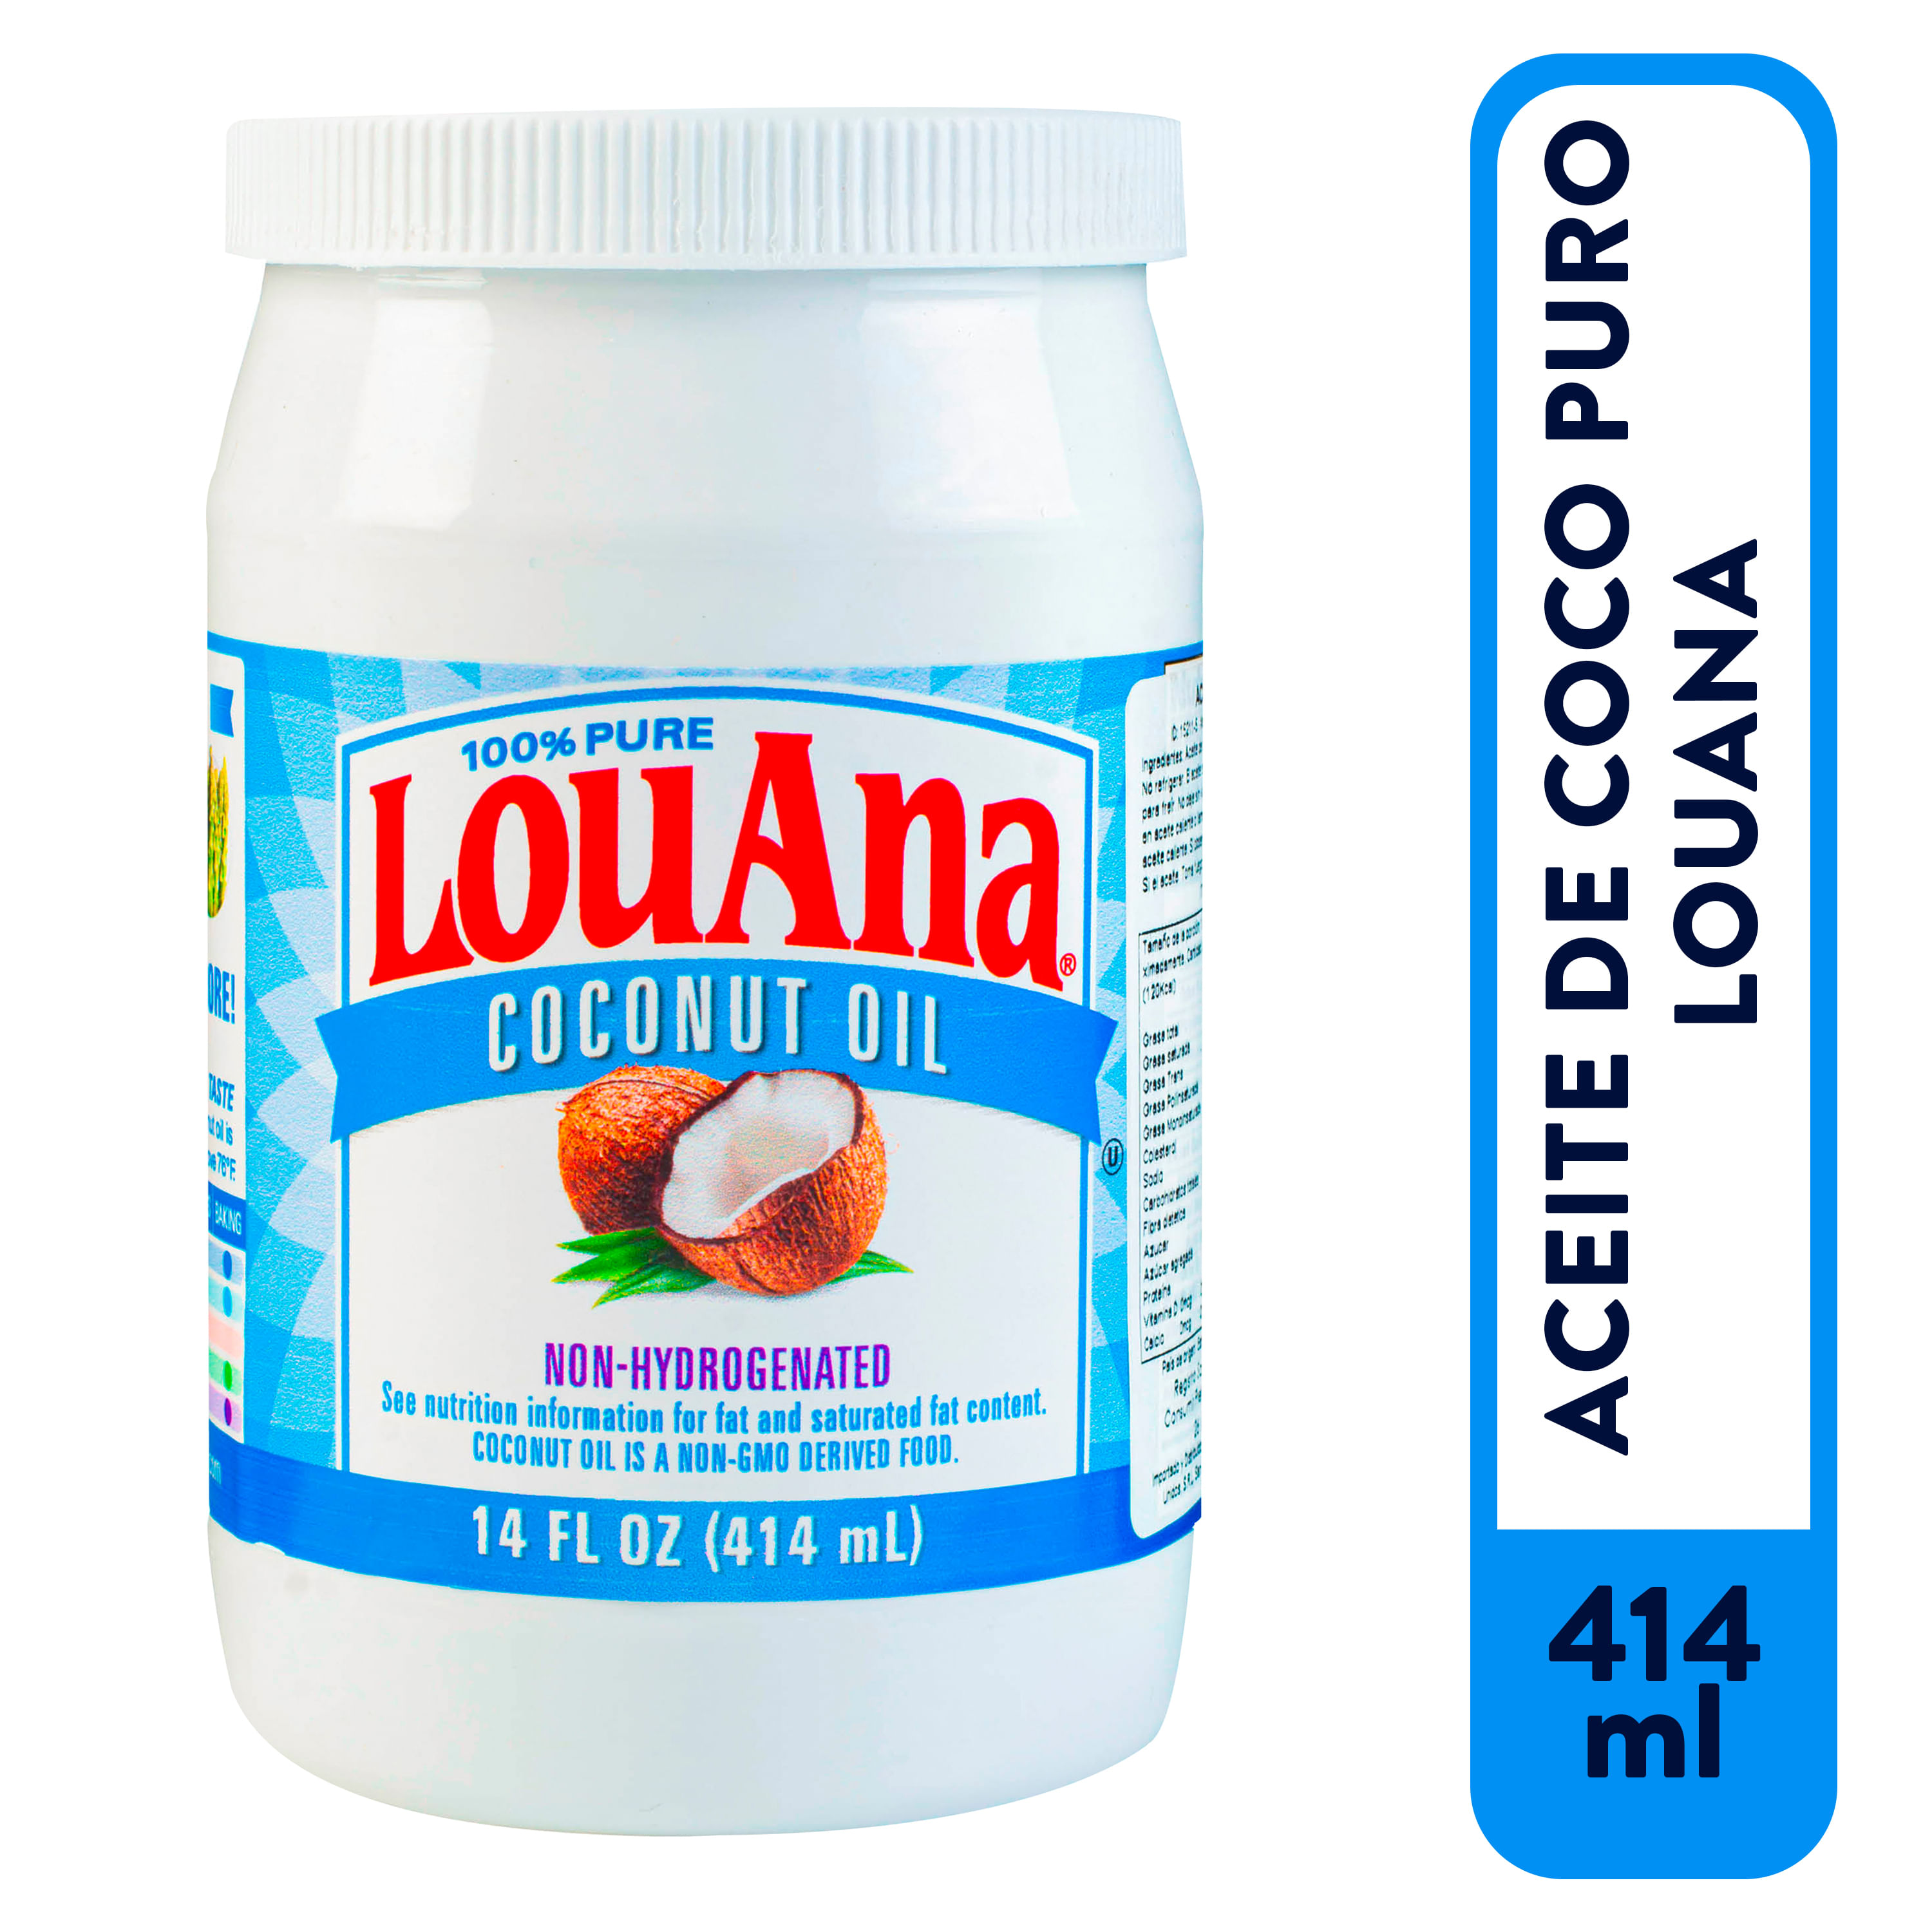 Comprar Aceite De Coco Puro Louana - 414ml